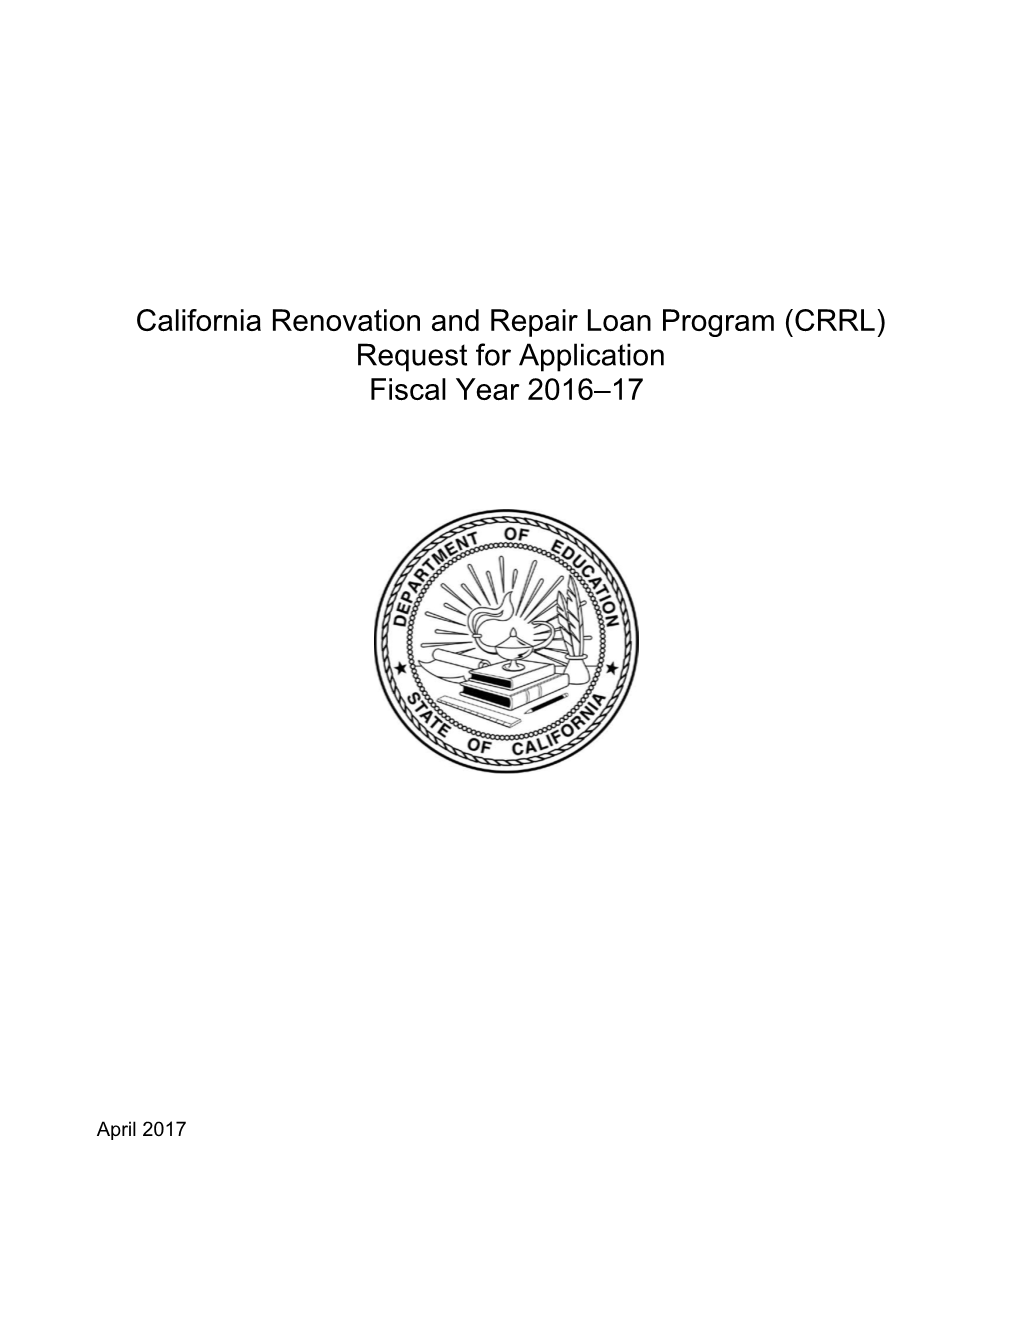 FY 2016-17 CRRL Program Overview - Child Development (CA Dept of Education)